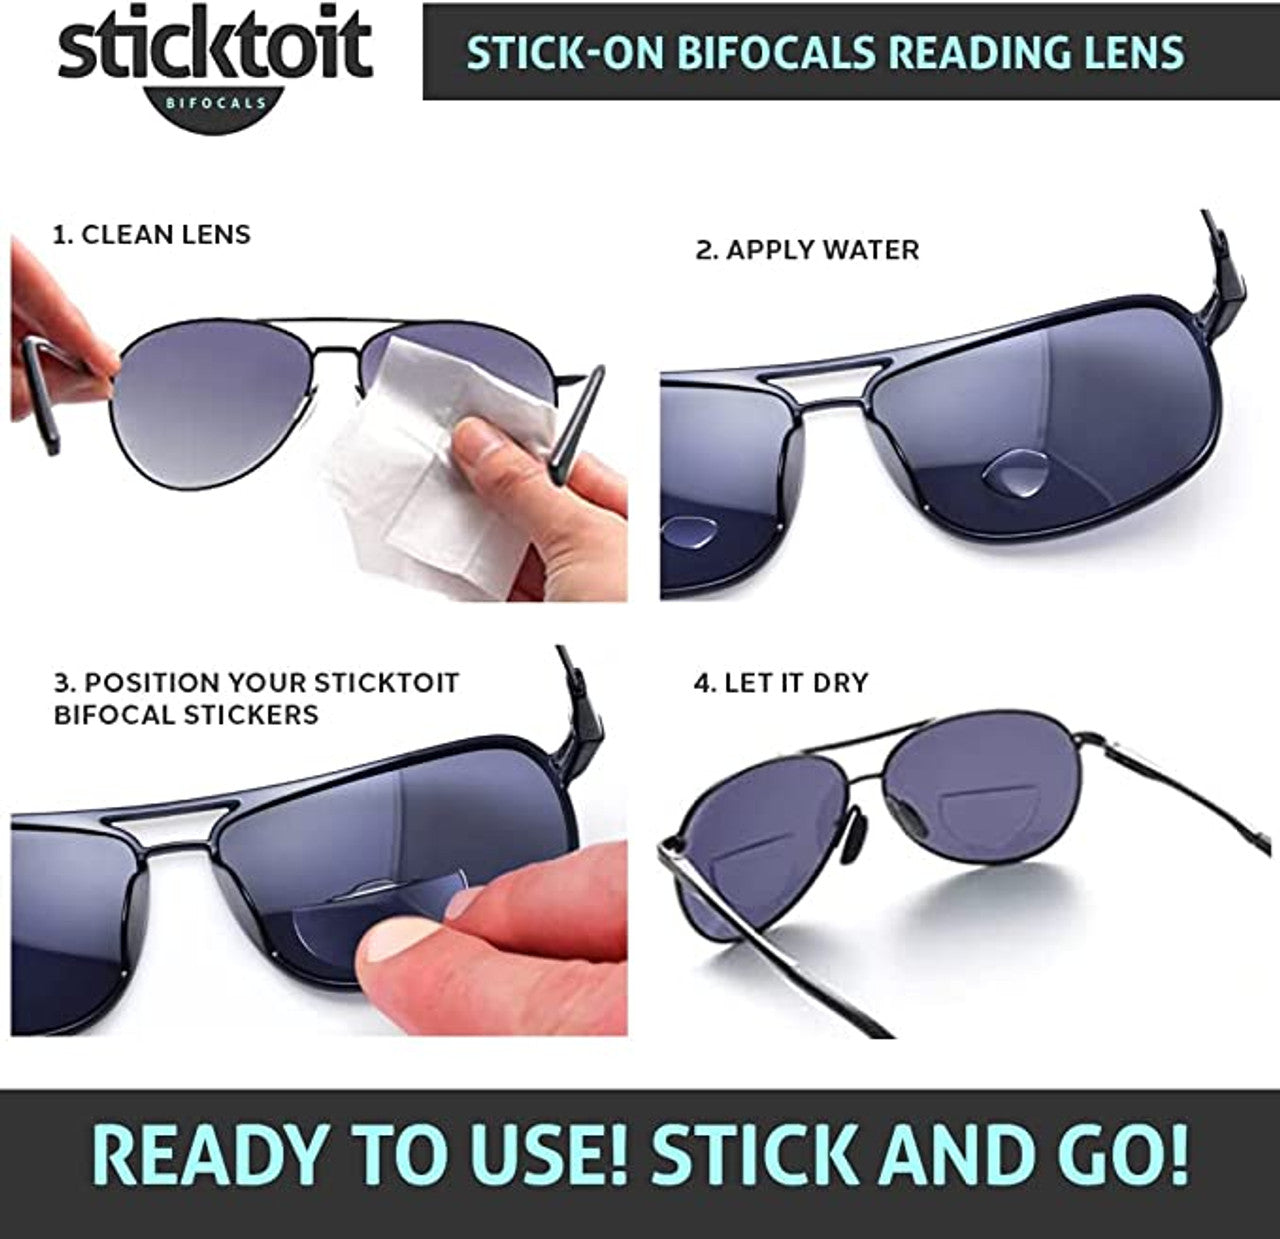 Sticktoit Stick-On Bifocals are easy to install